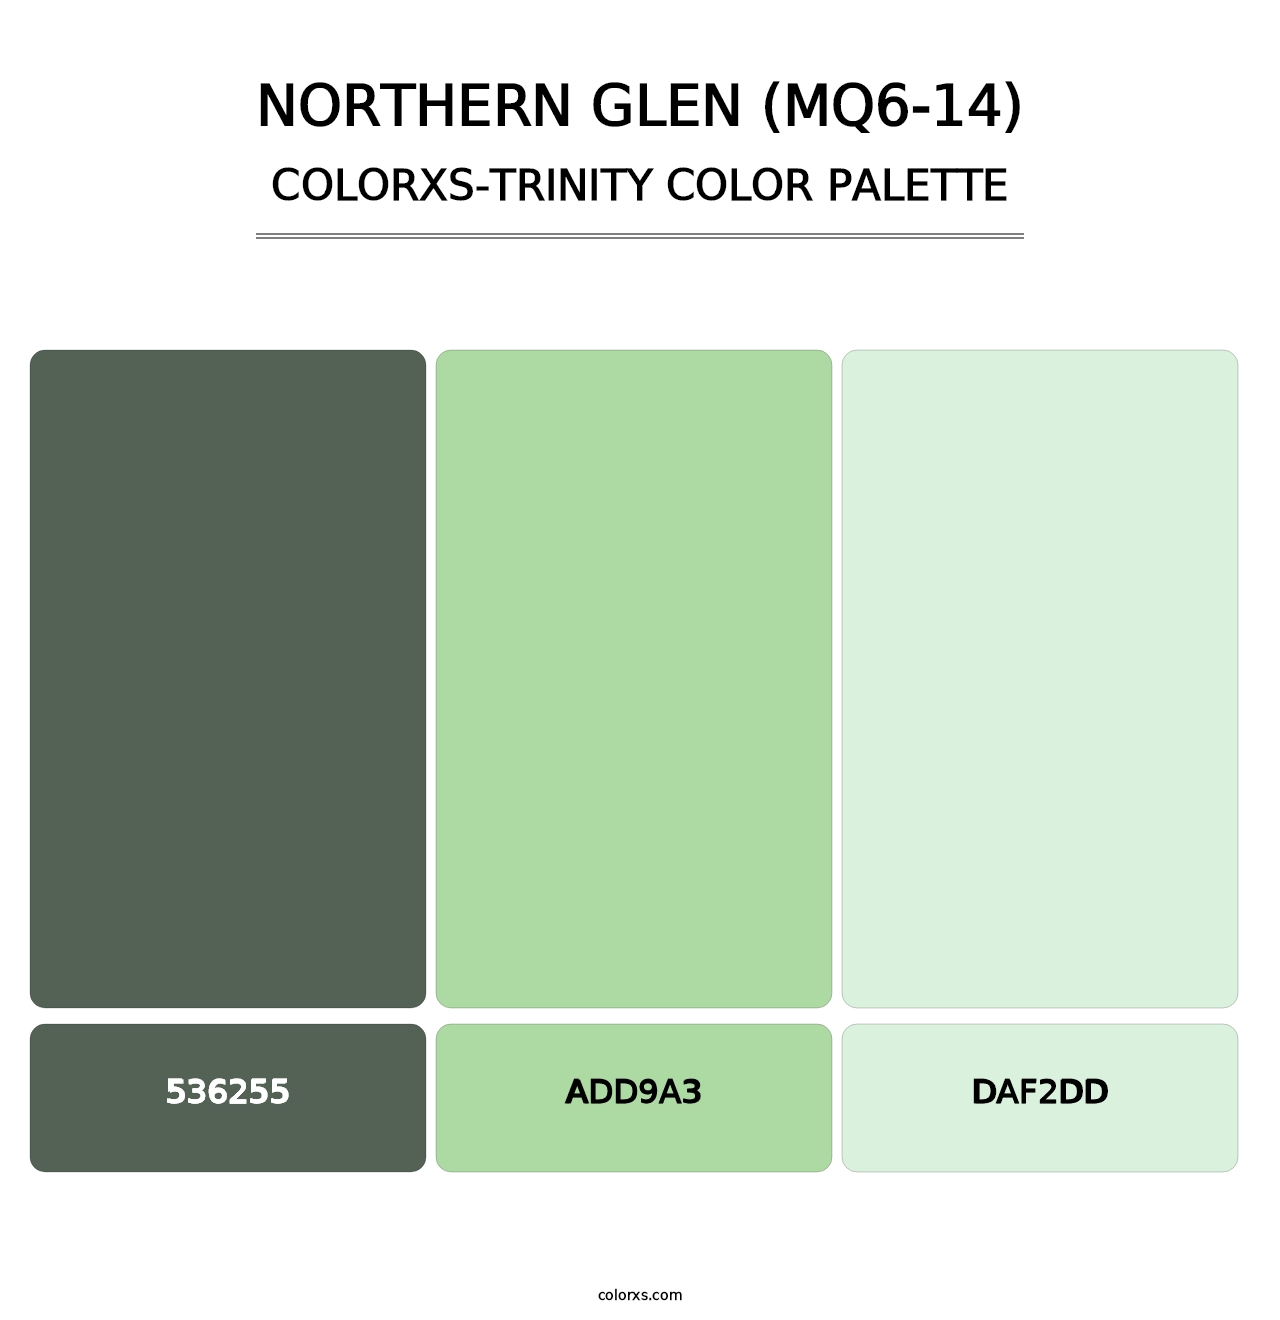 Northern Glen (MQ6-14) - Colorxs Trinity Palette